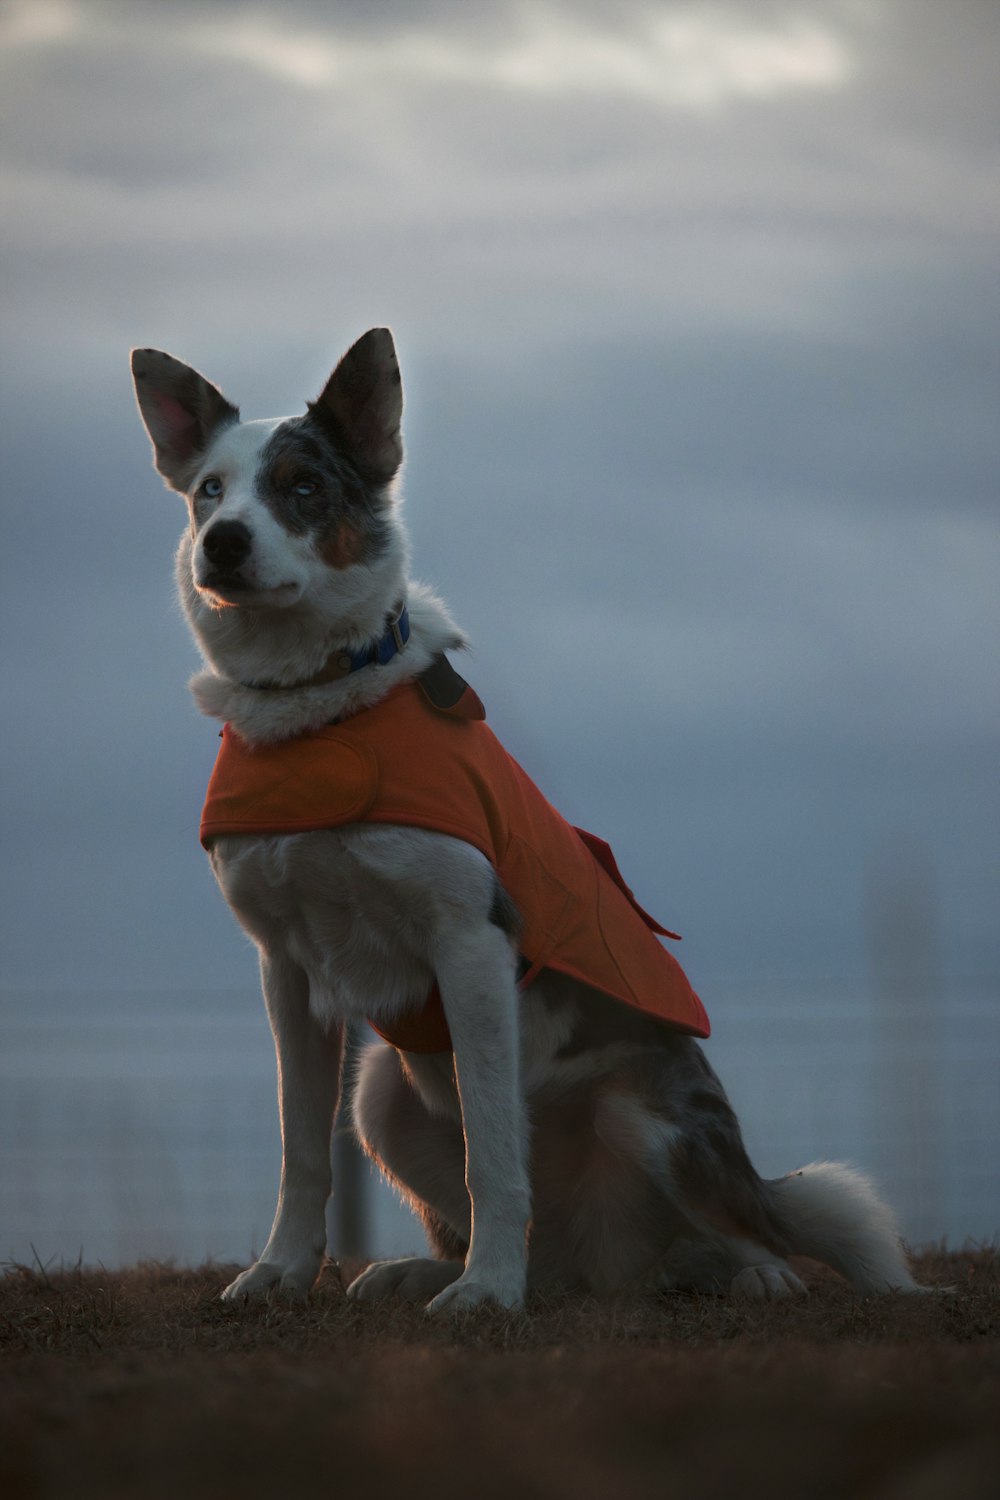 a dog wearing an orange vest sitting on the ground